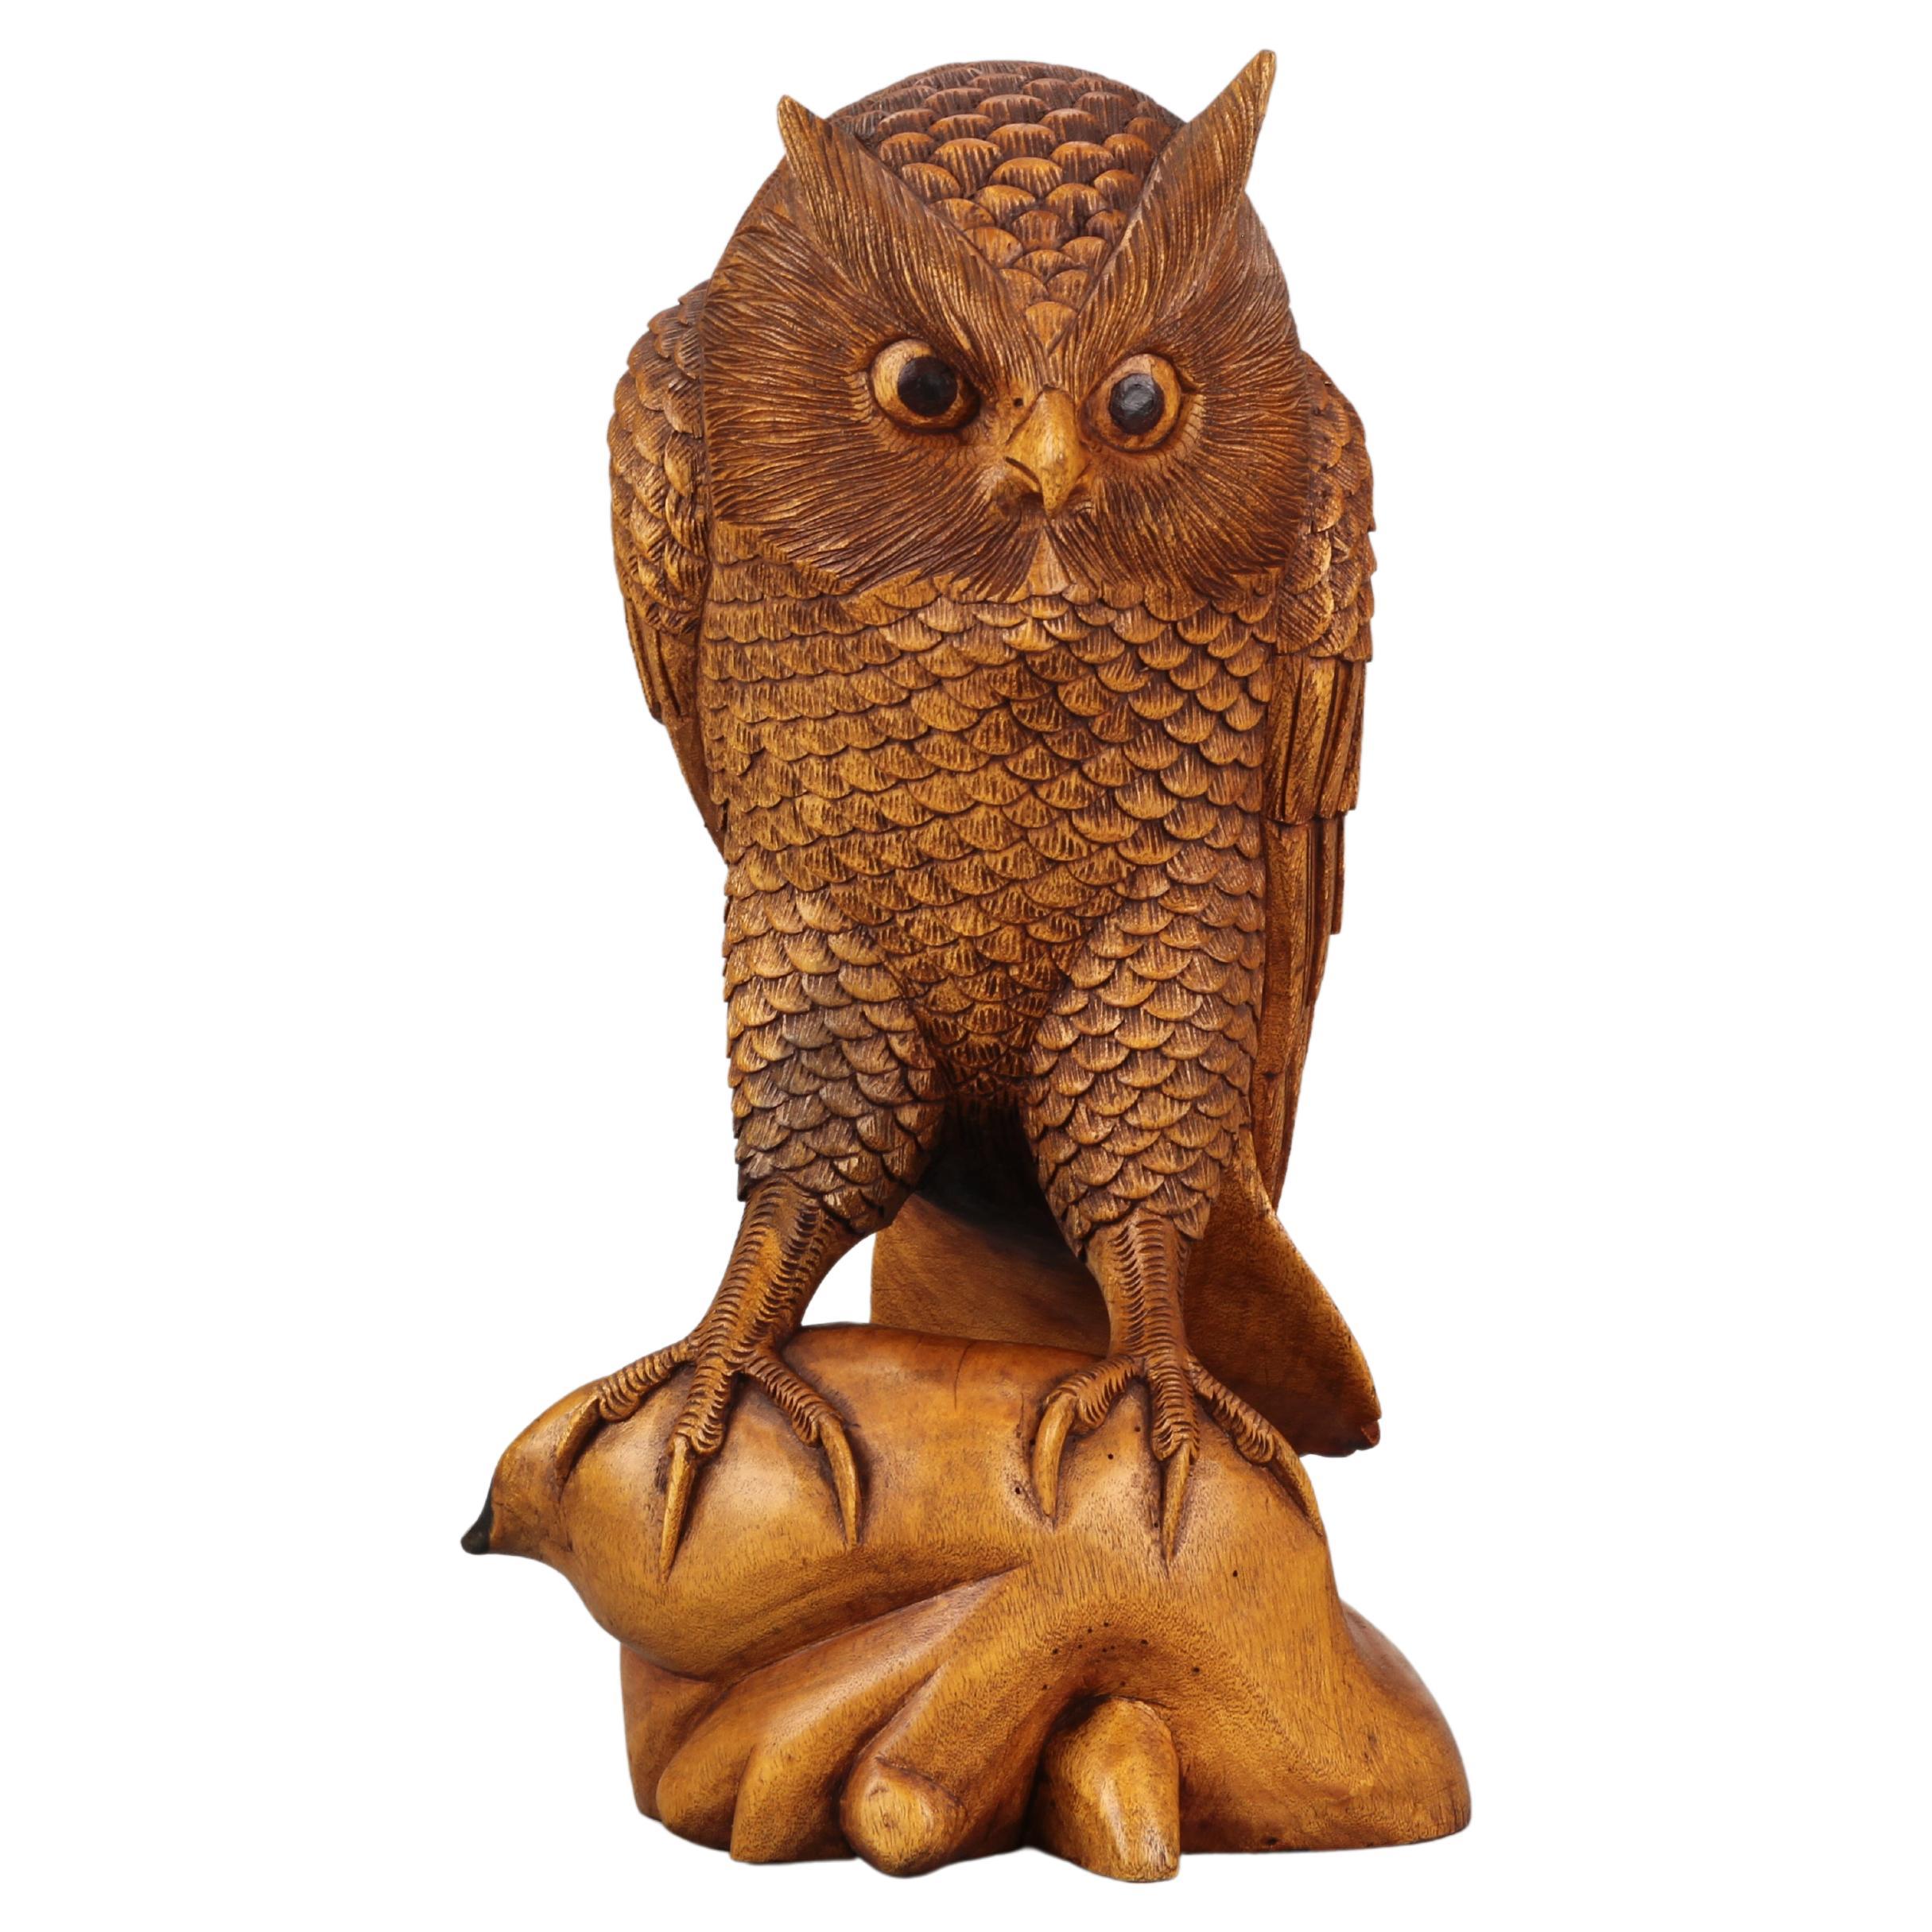 Hand-Carved Light-Brown Wooden Owl Sculpture 